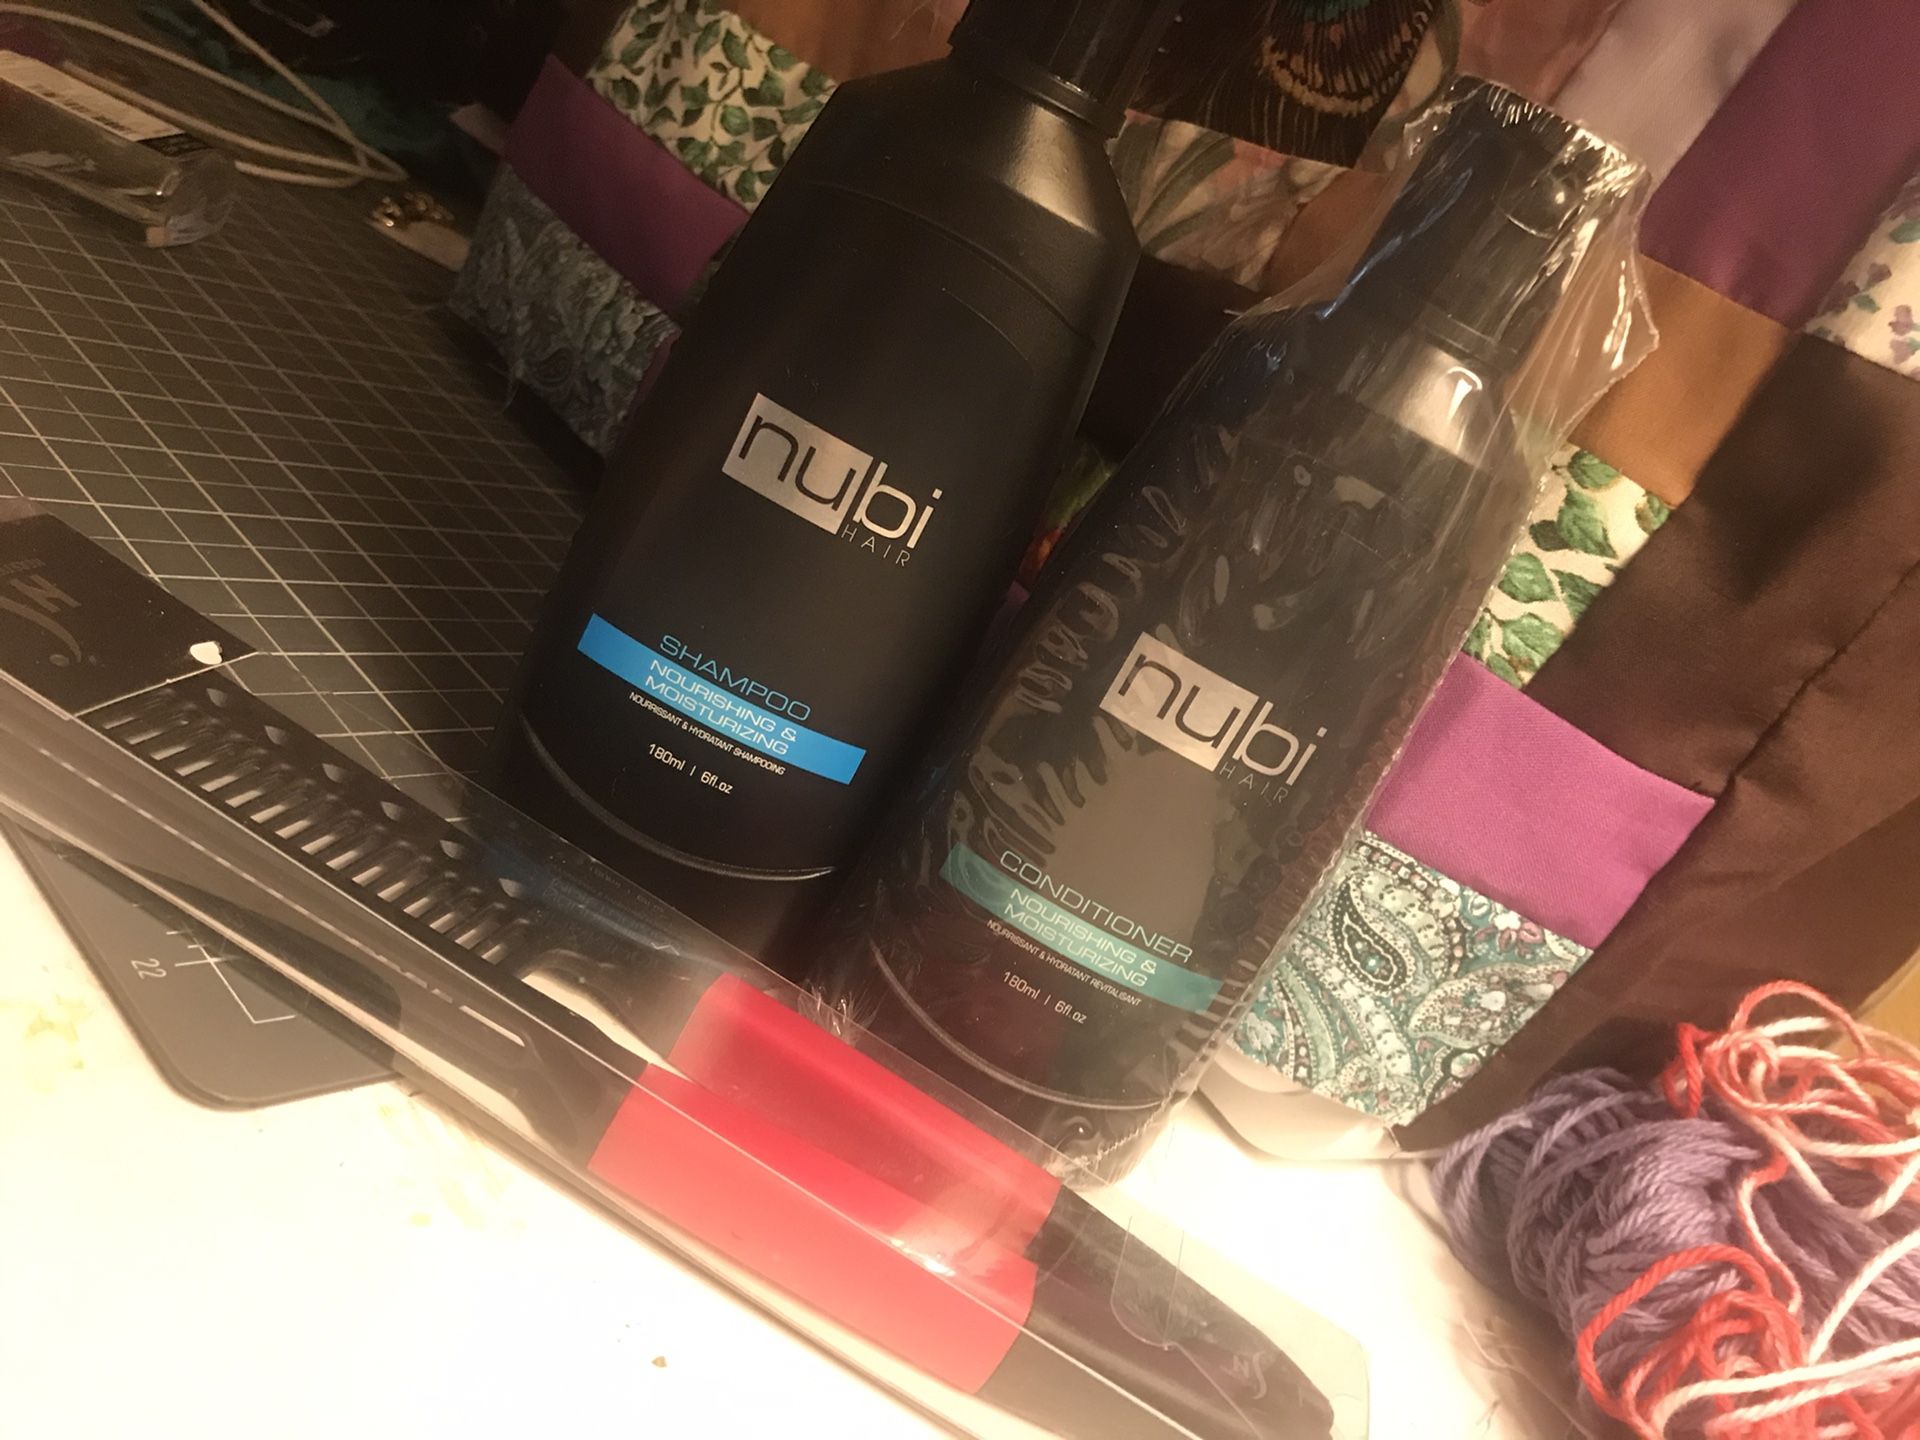 Nubi shampoo/conditioner